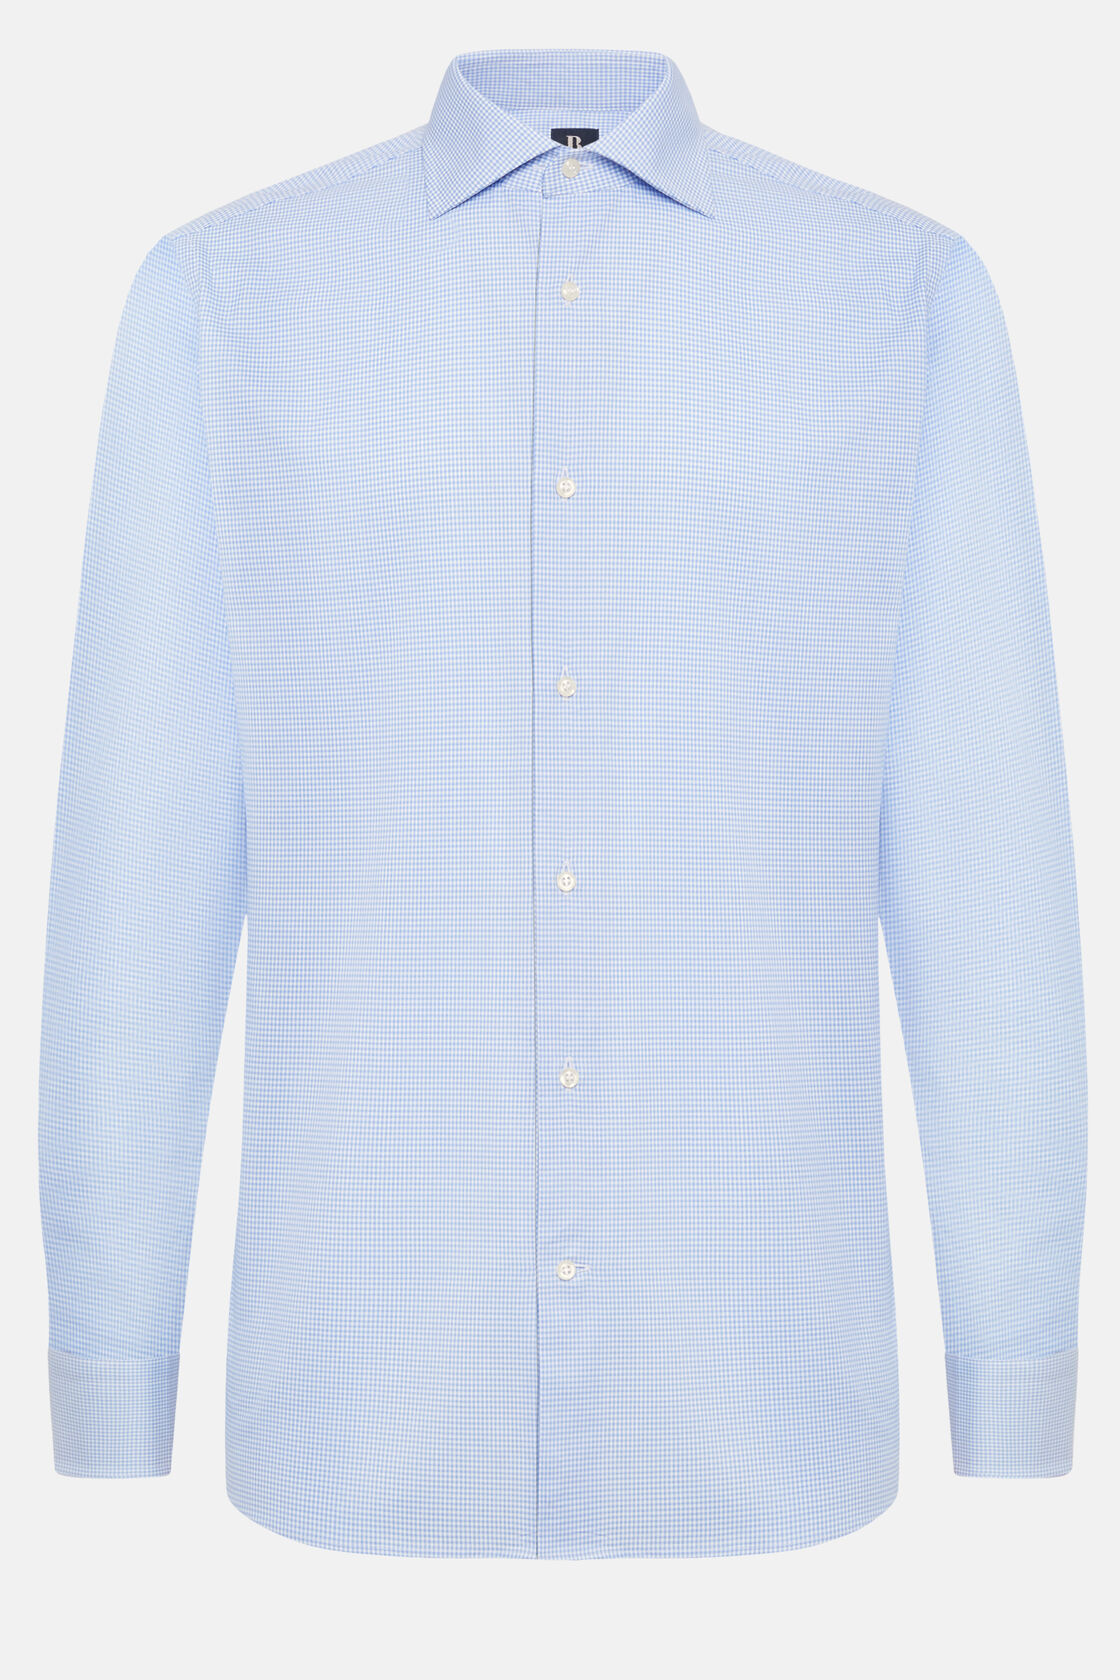 Checjk Windsor Collar Shirt Regular Fit, Light Blue, hi-res